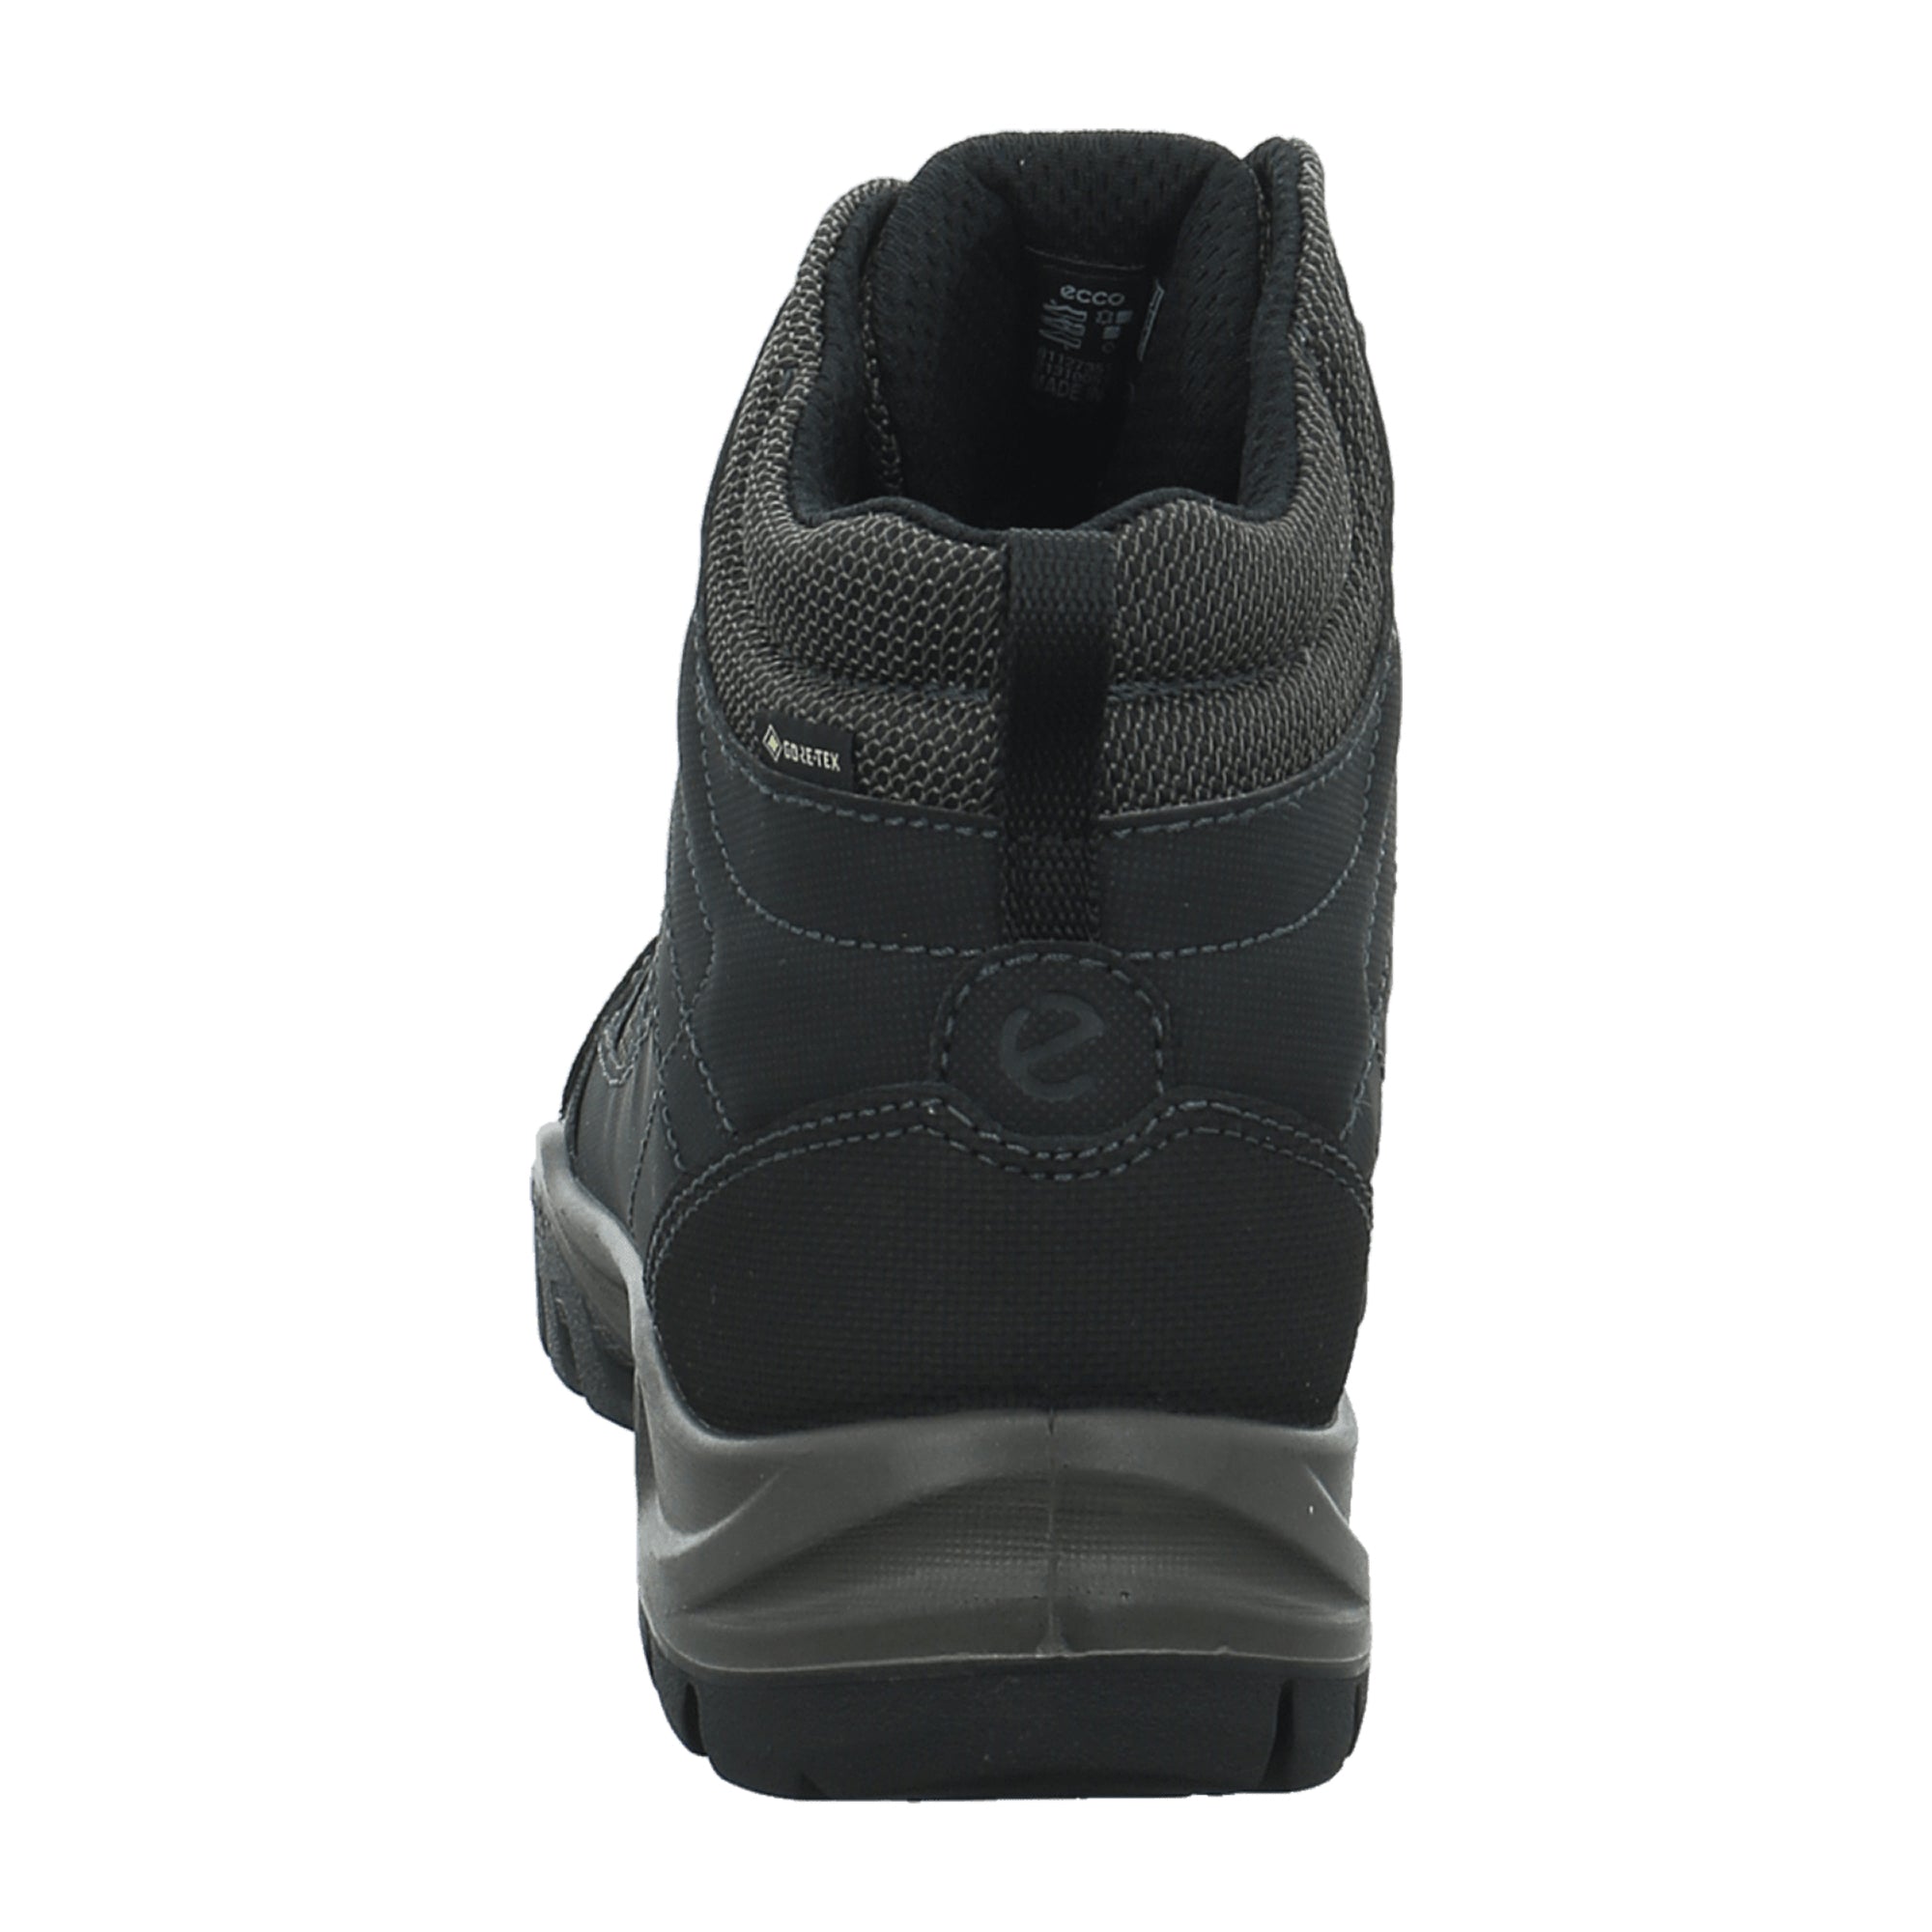 Ecco 811273 Women's Black Comfort Shoes - Stylish & Durable